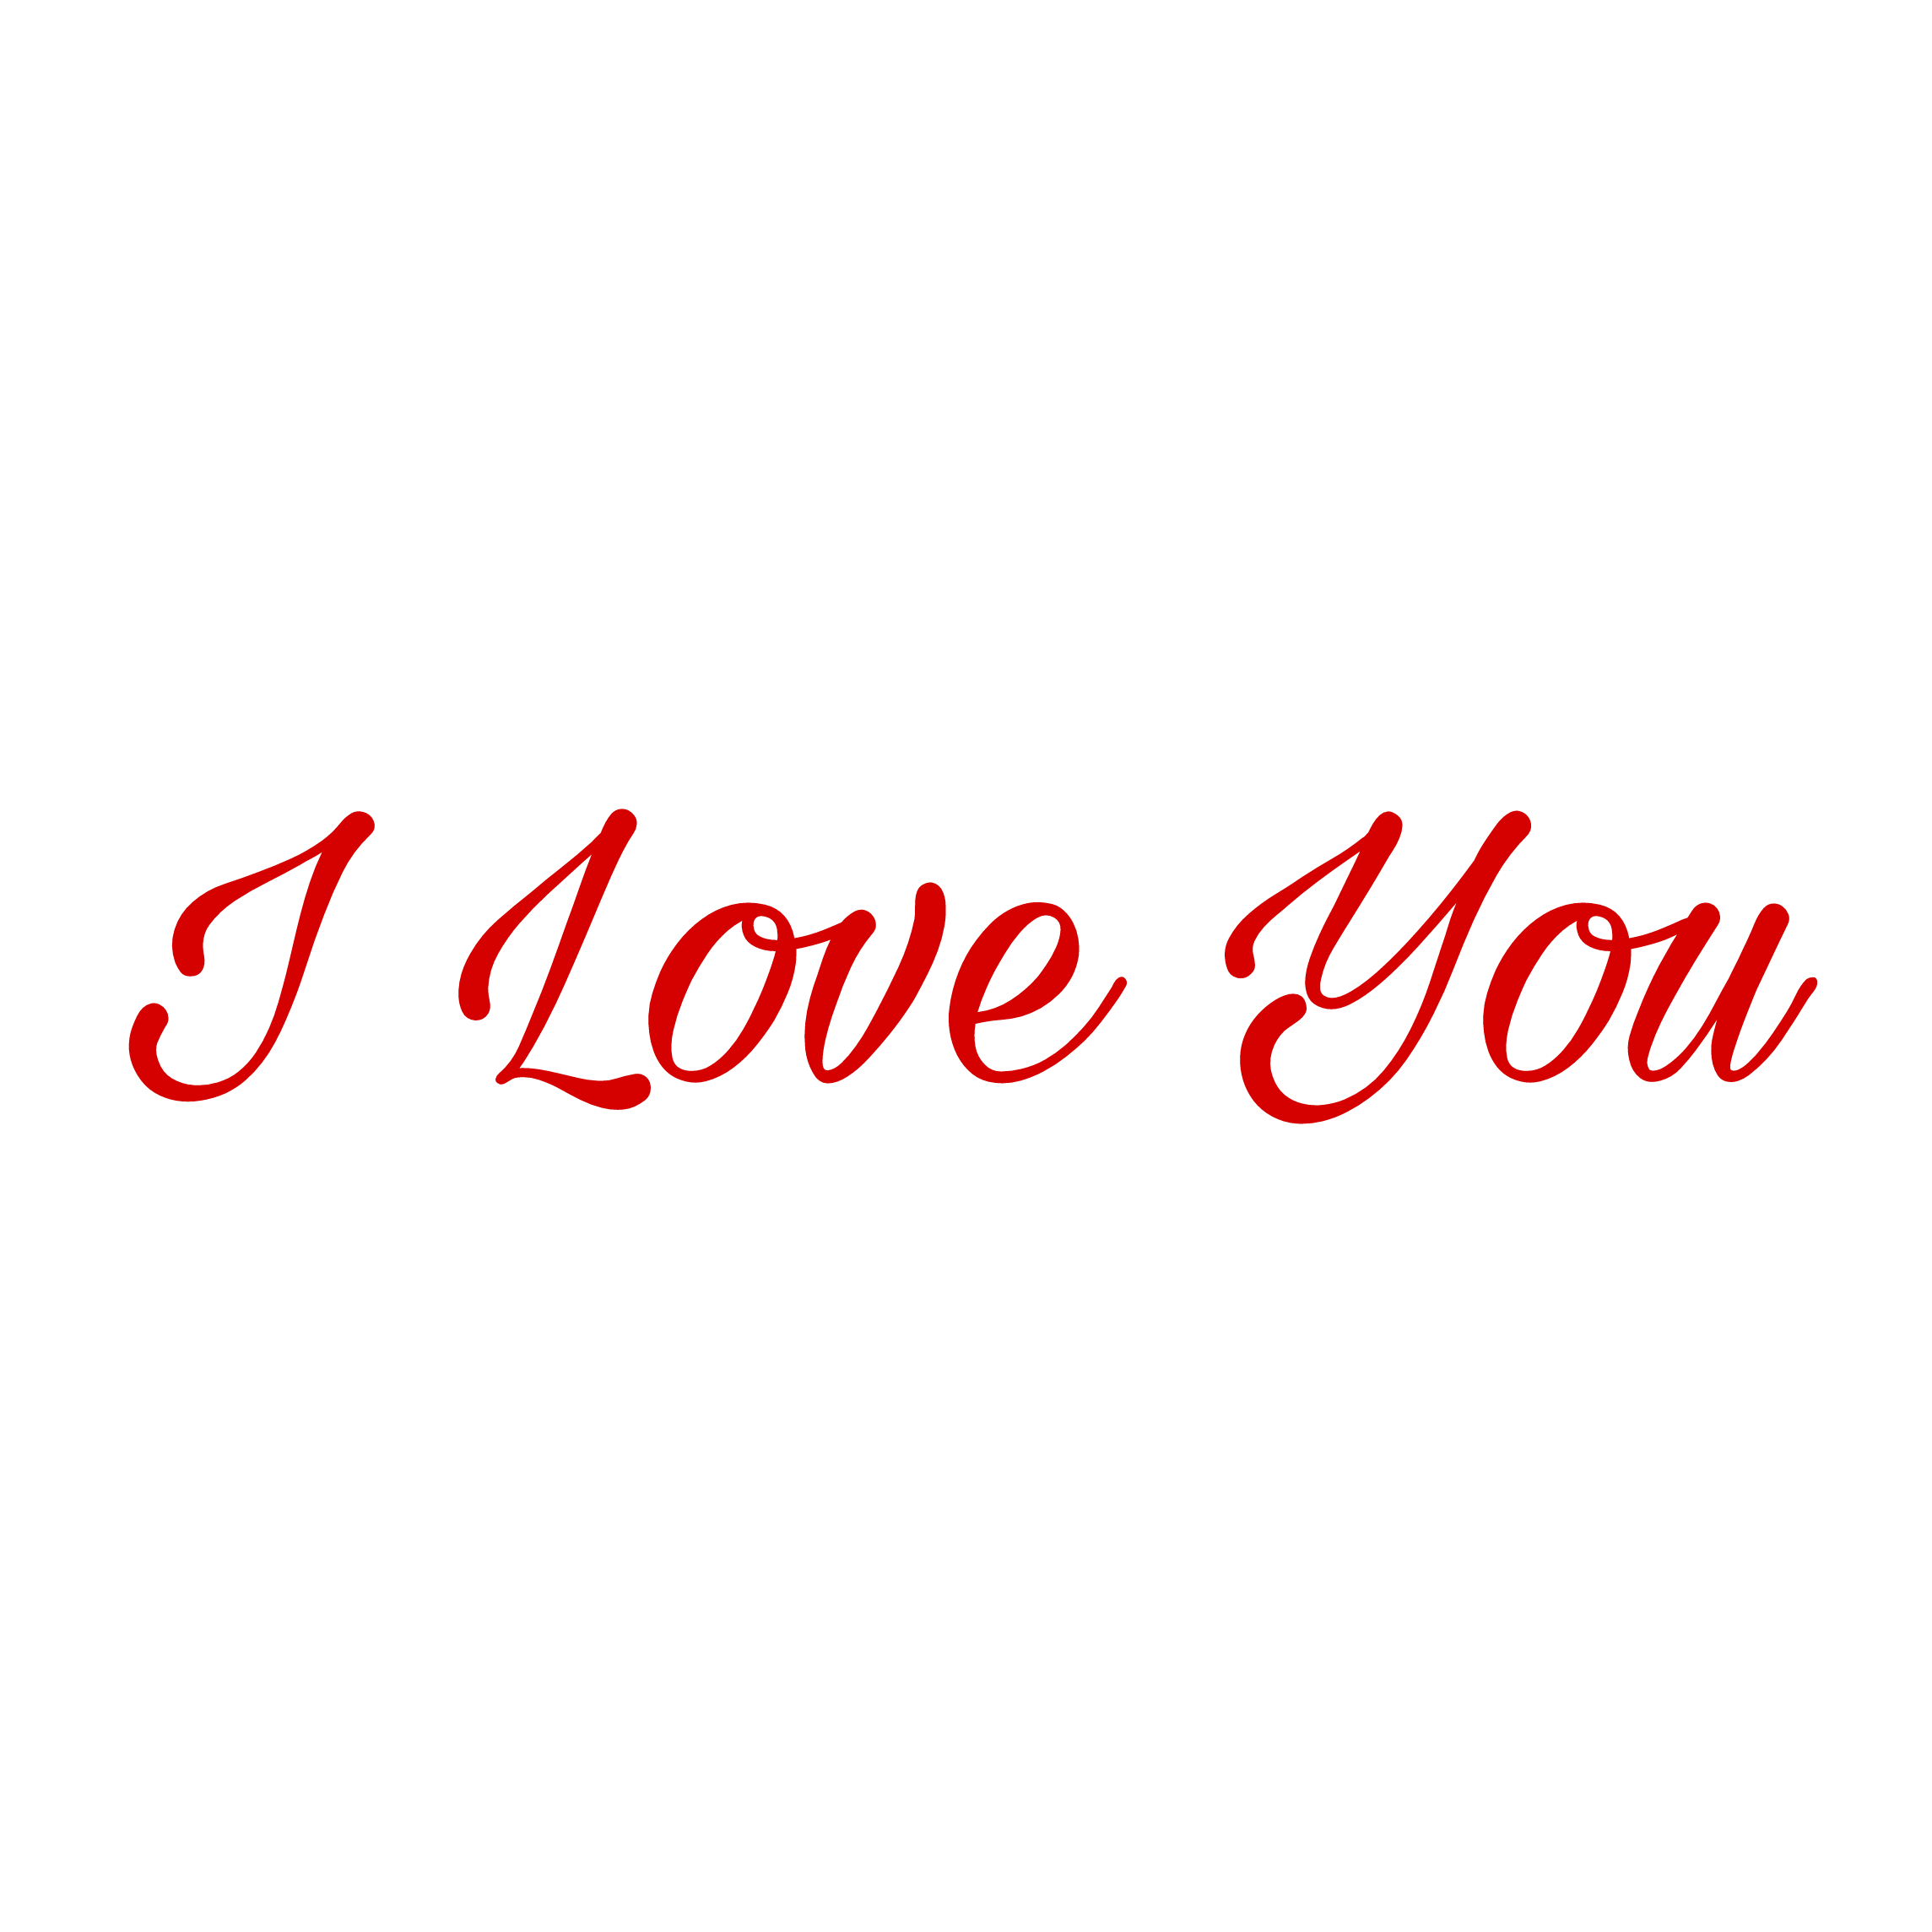 iloveyou iloveyoutext sticker by @otakudelosksebaian